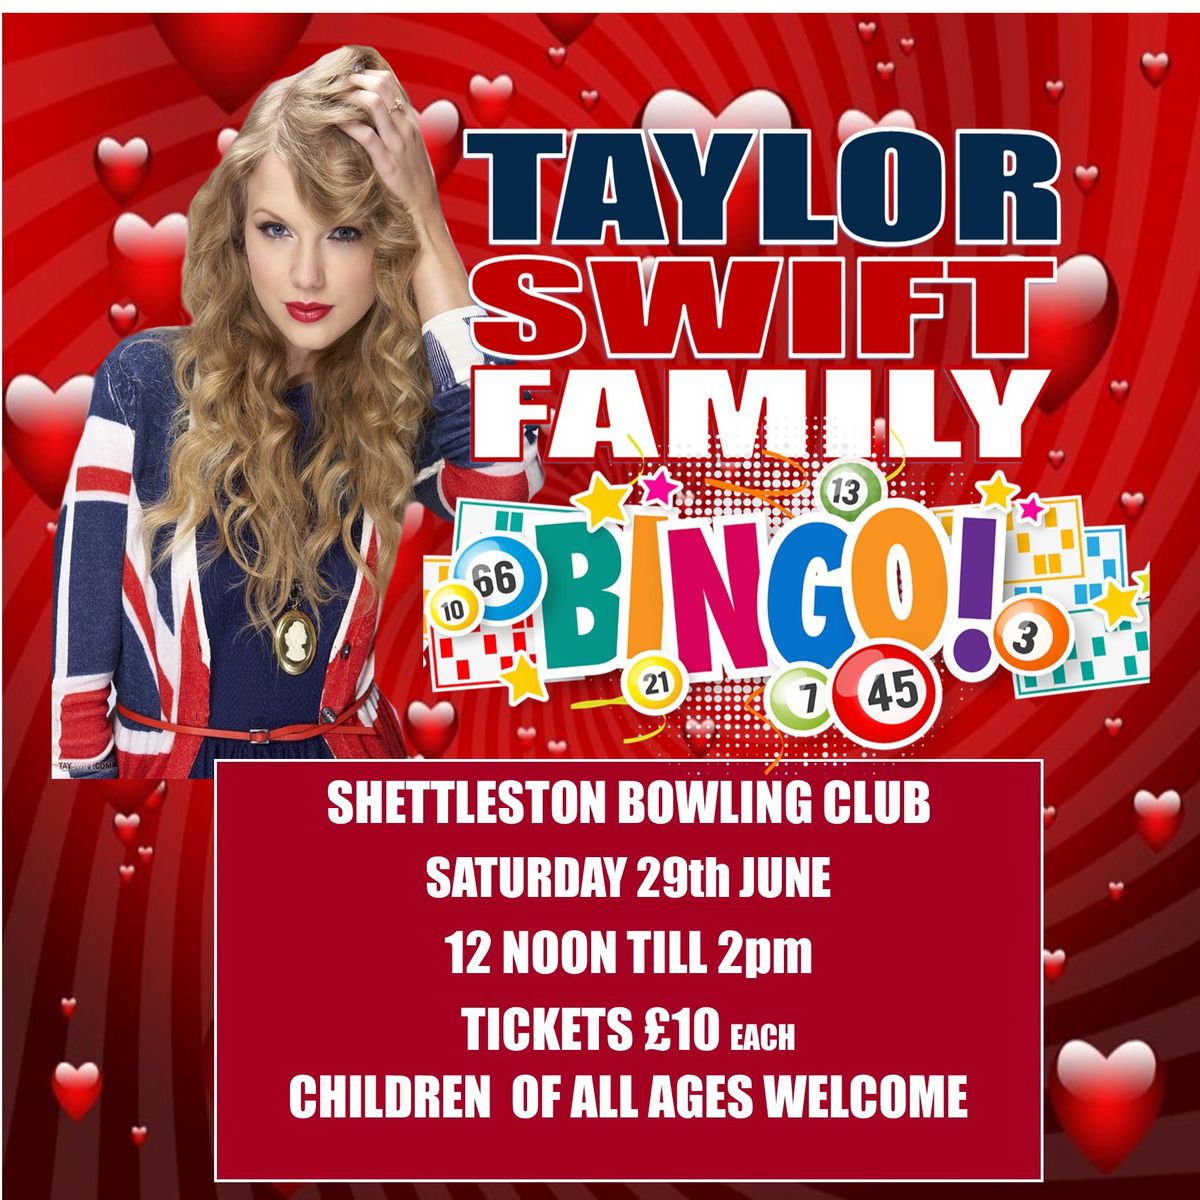 Shettleston- Taylor Swift Family Bingo